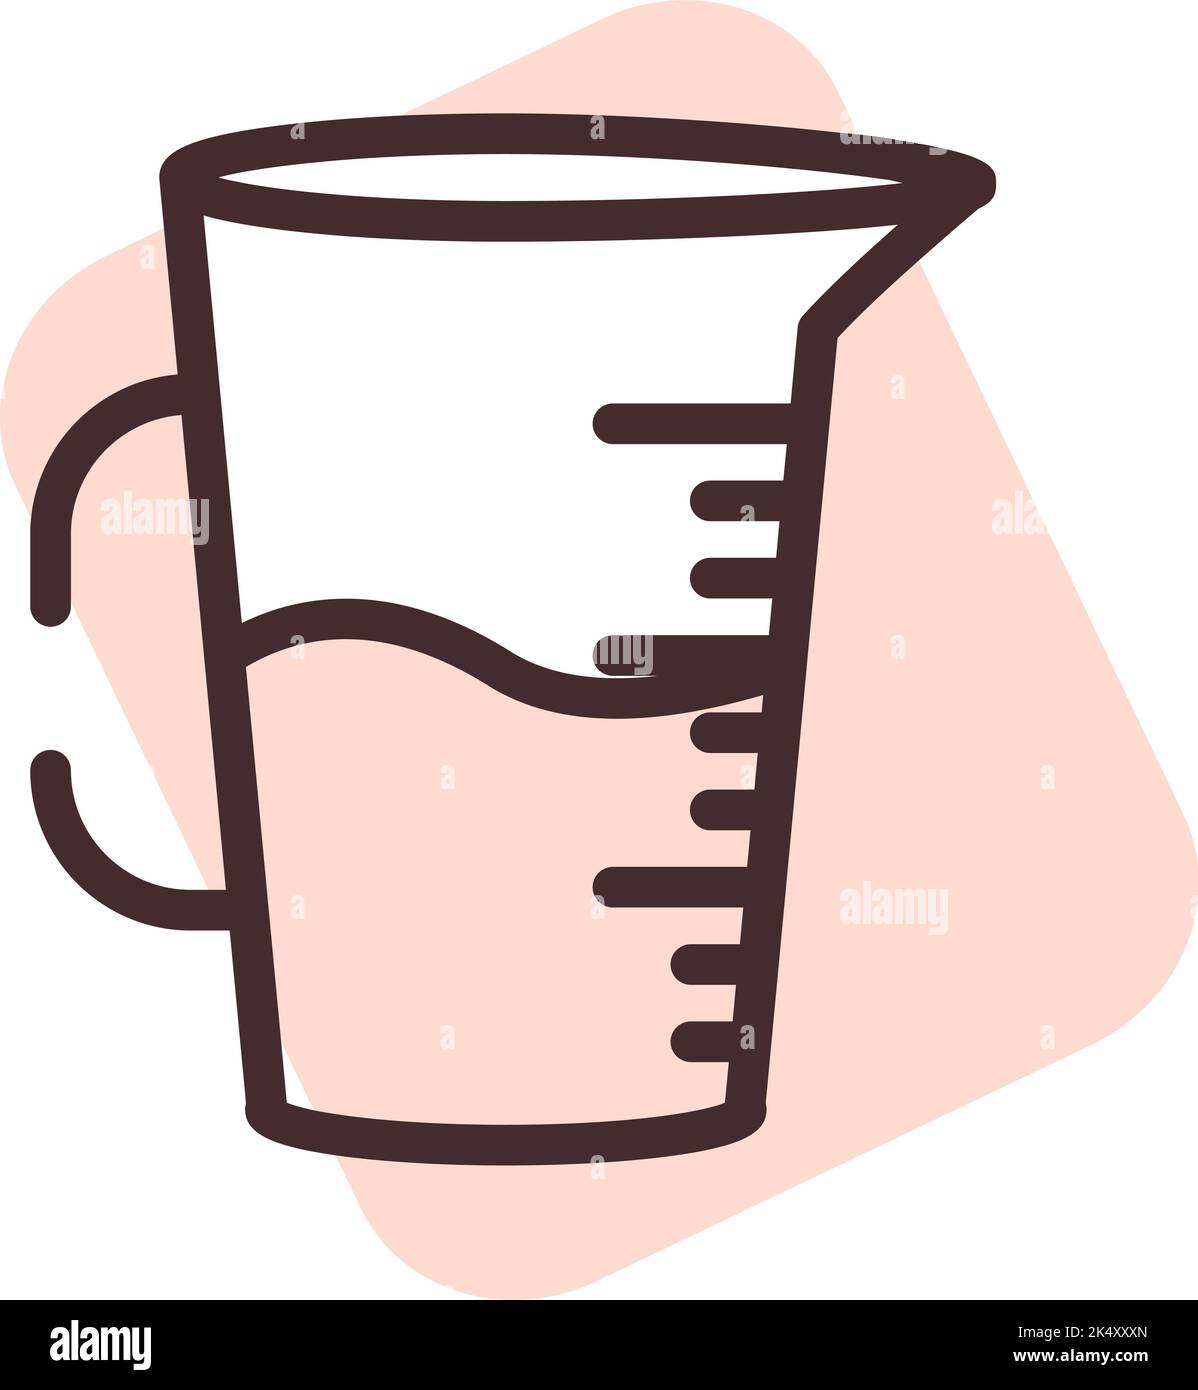 https://c8.alamy.com/comp/2K4XXXN/restaurant-measuring-cup-illustration-vector-on-a-white-background-2K4XXXN.jpg